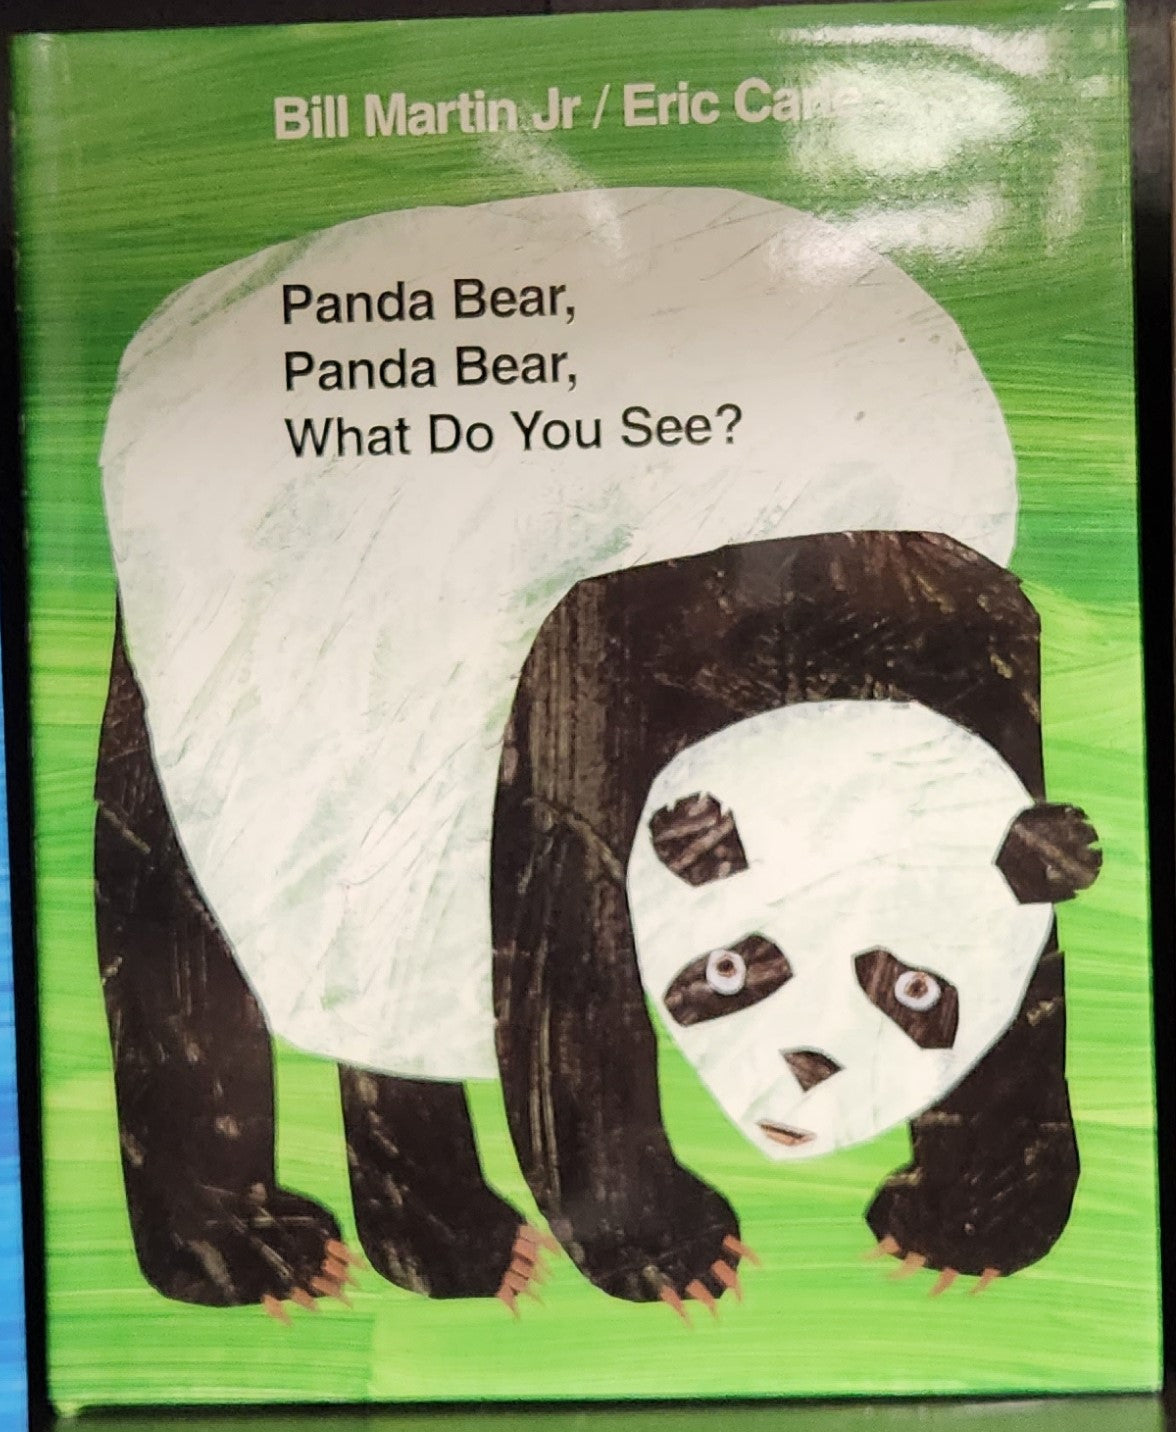 "Panda Bear, Panda Bear, What Do You See?" by Bill Martin Jr. / Eric Carle